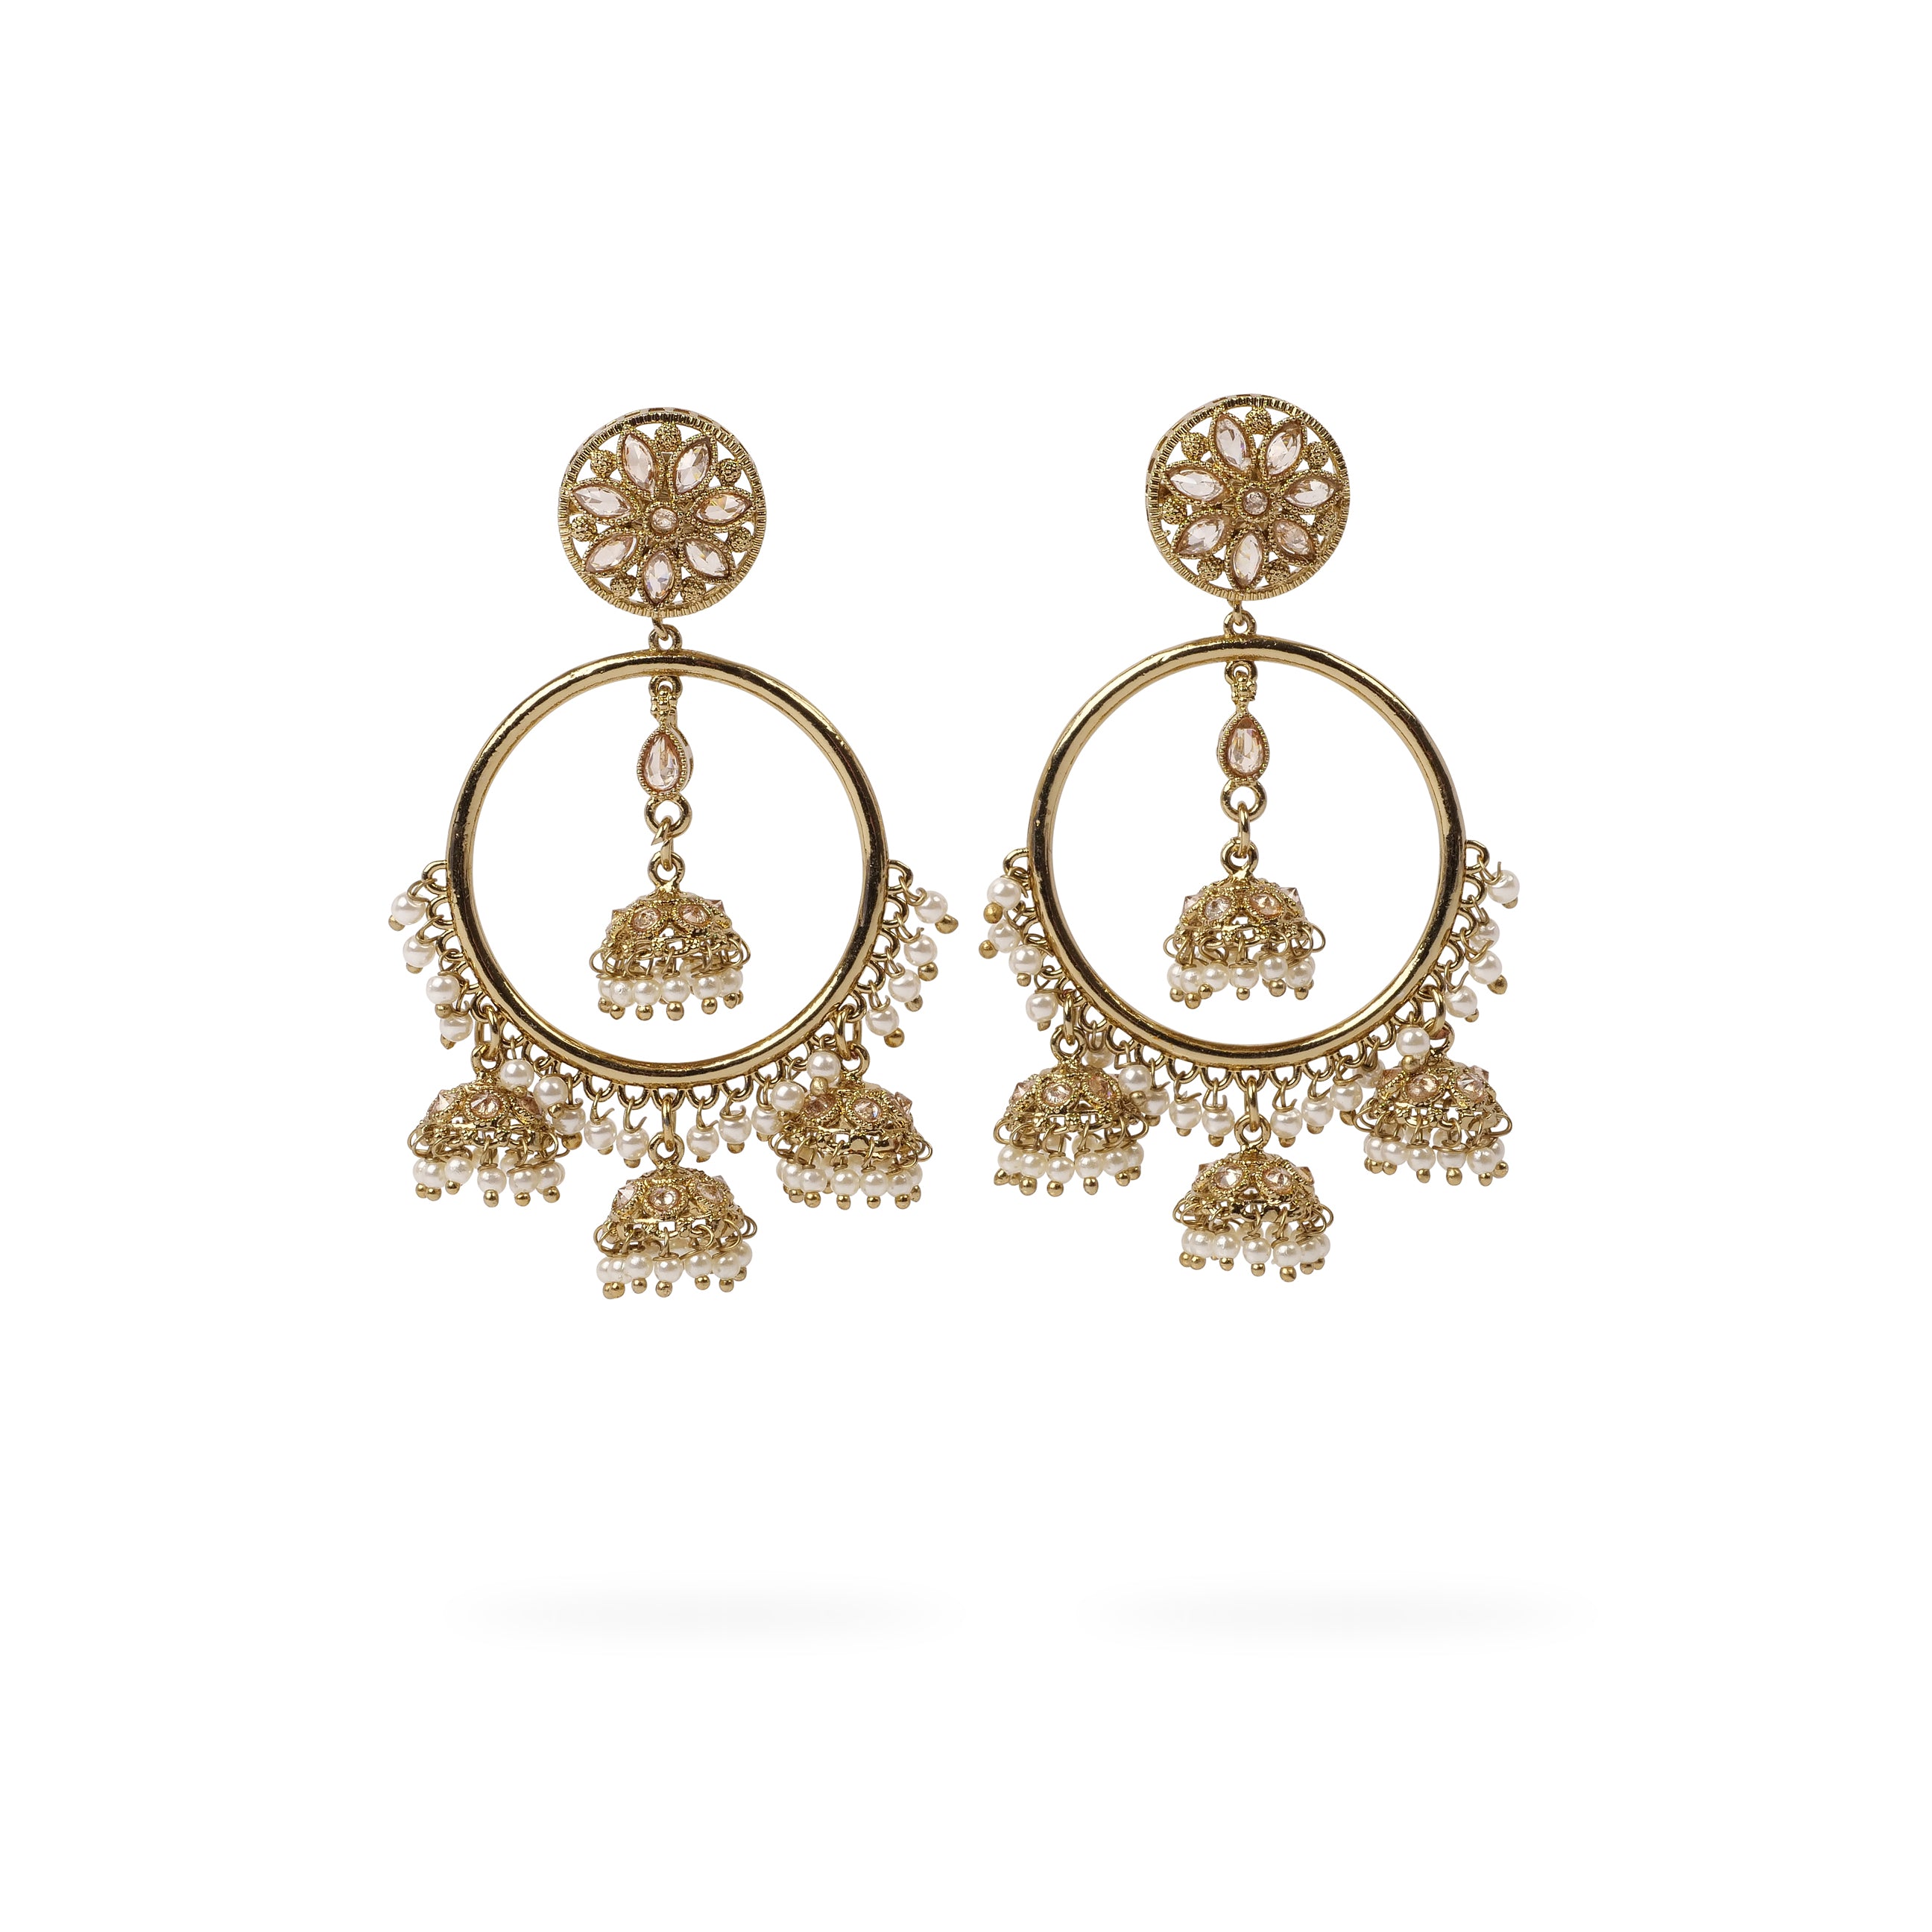 Rani Jhumka Earrings in Pearl and Champagne